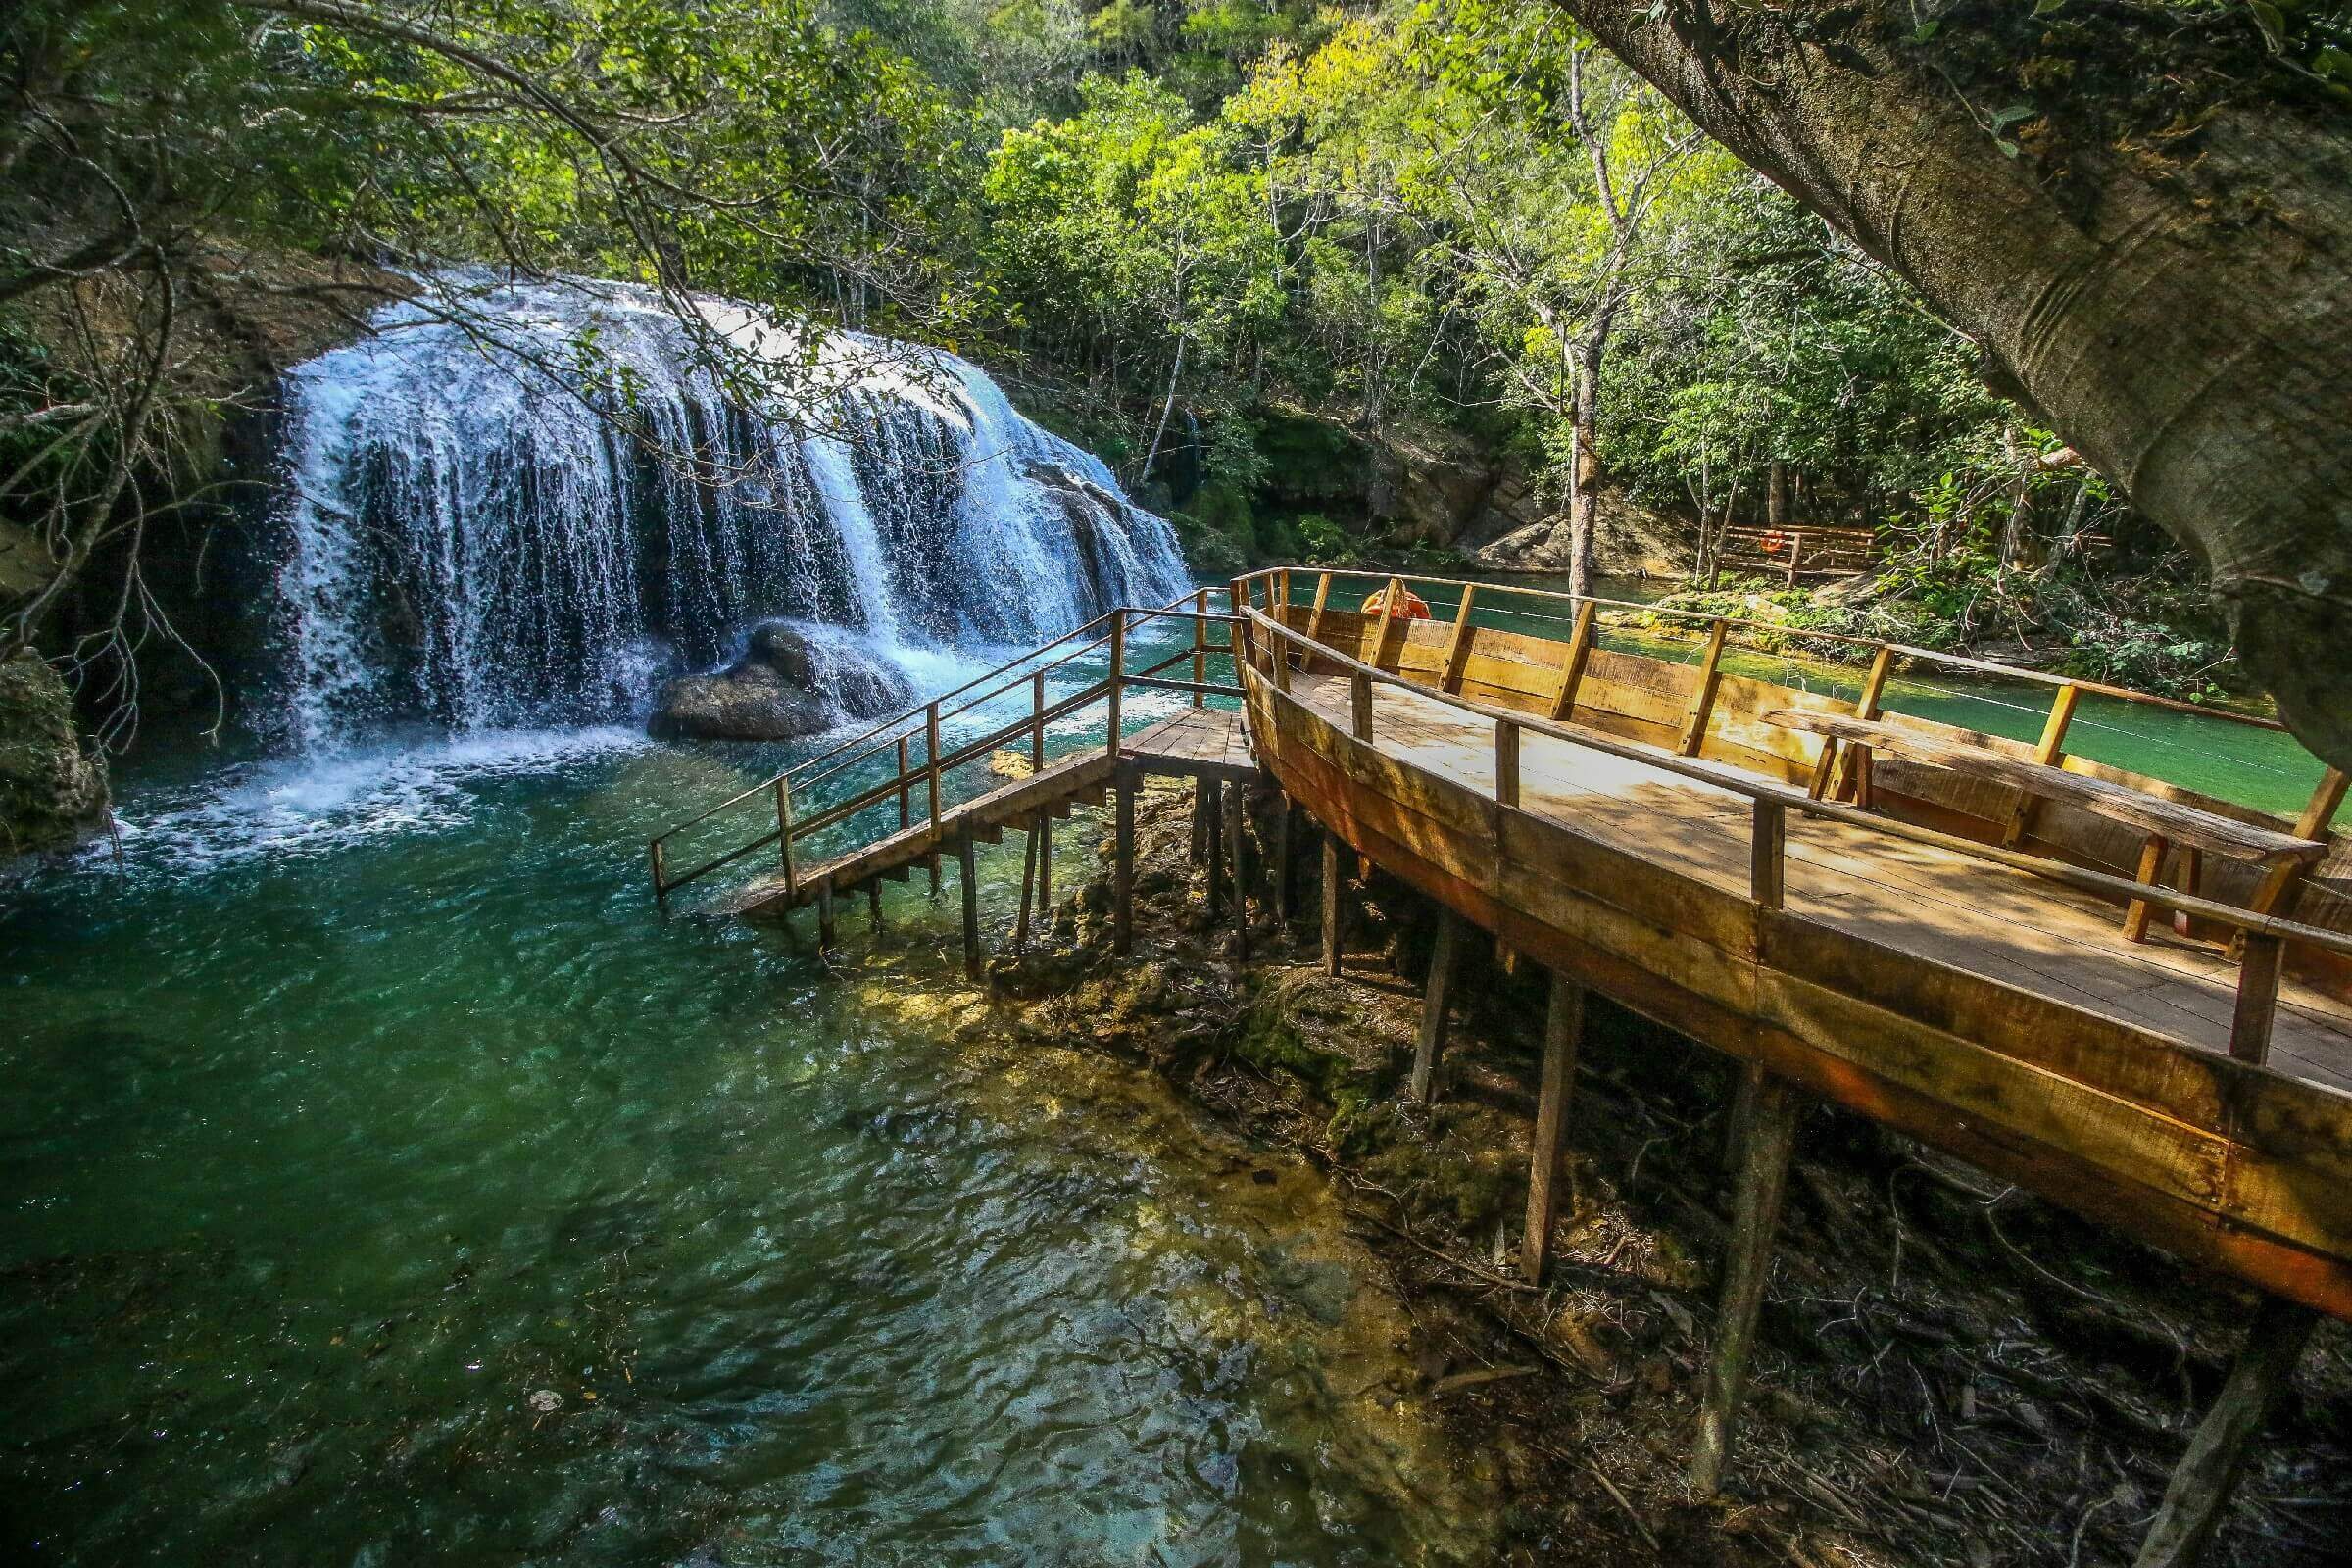 Parque das Cachoeiras (2)